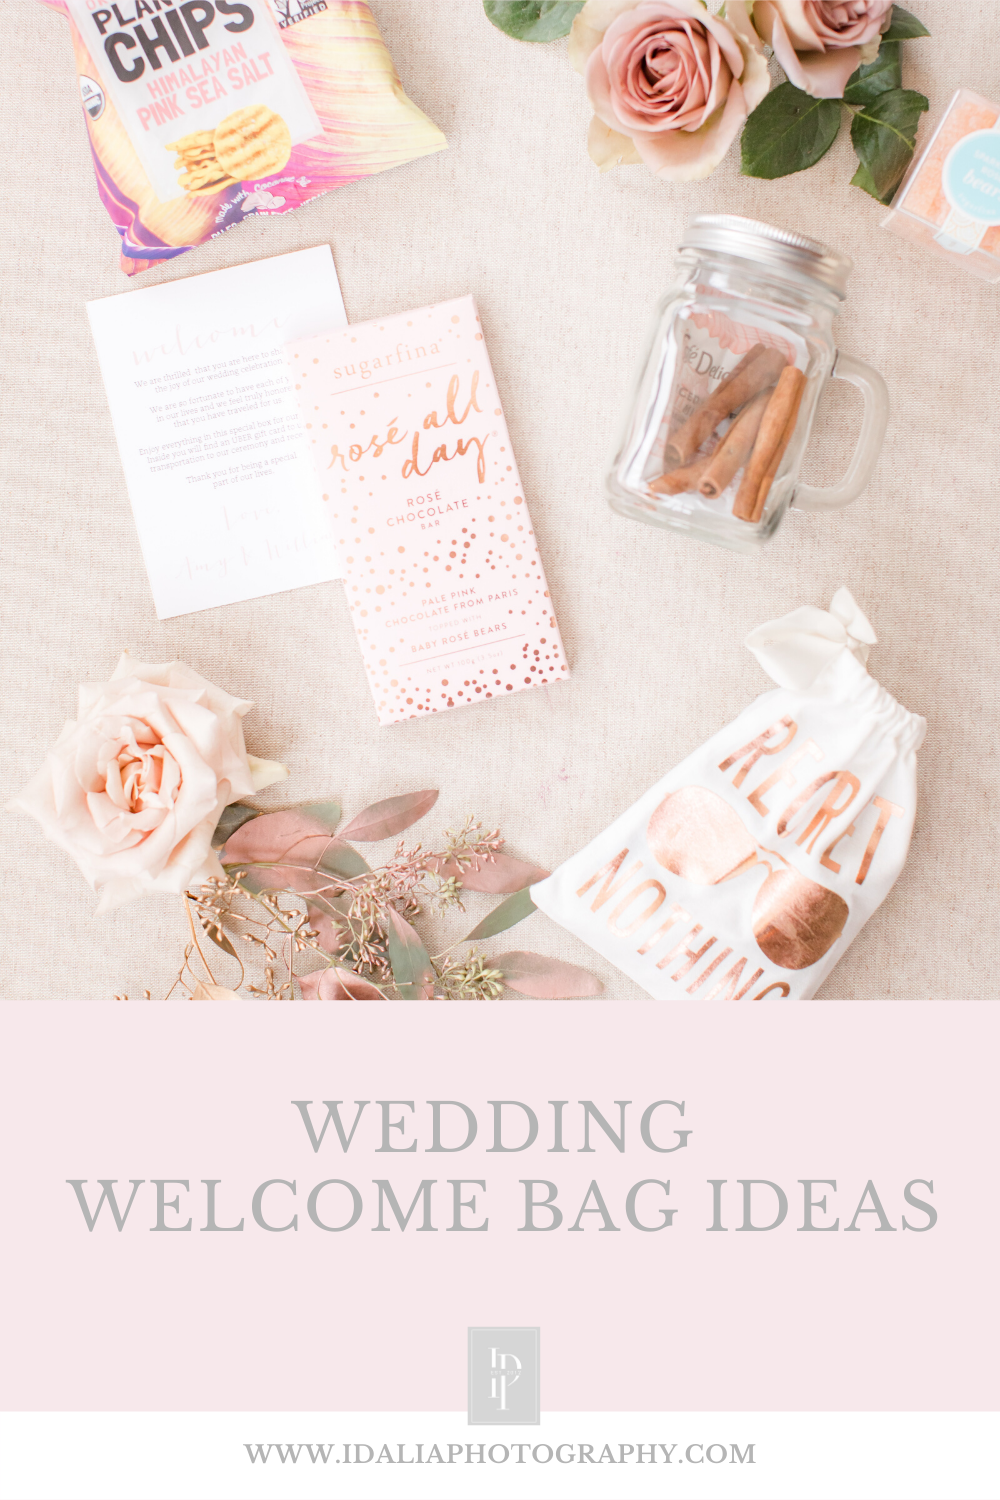 Wedding Welcome Bag Ideas by Idalia Photography